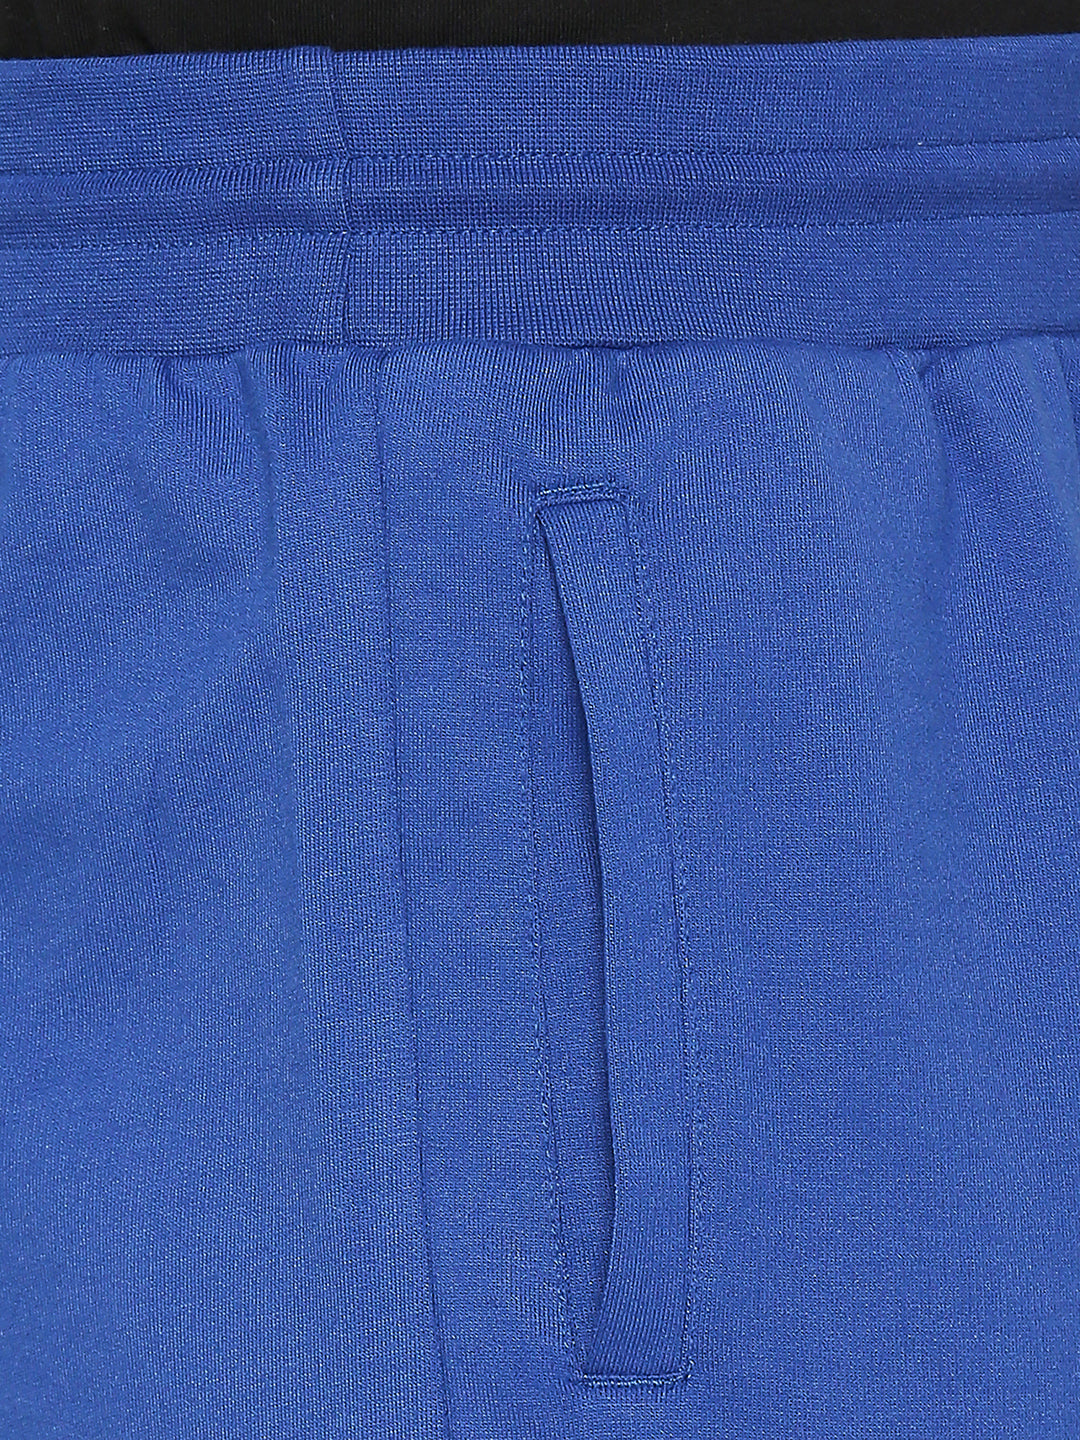 Men Royal blue Cotton Blend Shorts - Underjeans by Spykar